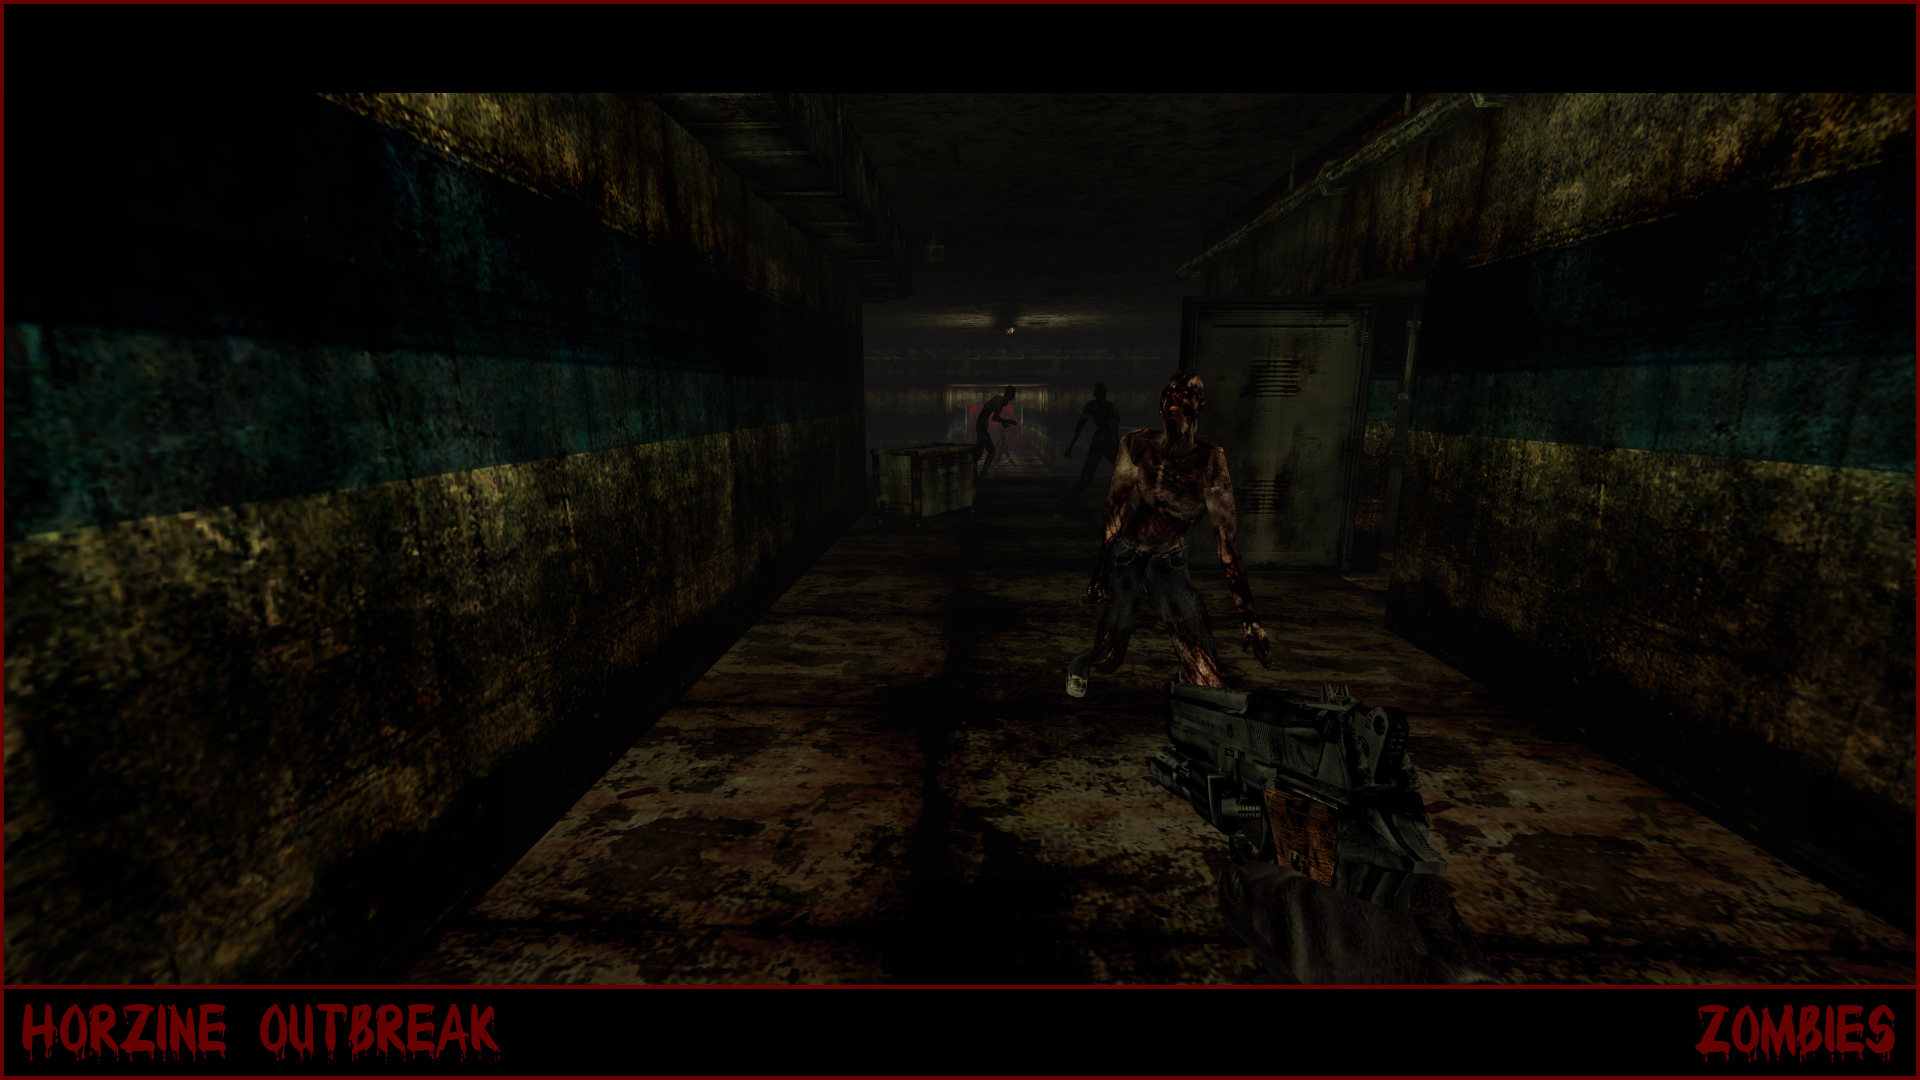 Zombies Alpha2 Image Killing Floor Horzine Outbreak Mod For Half Life Mod Db